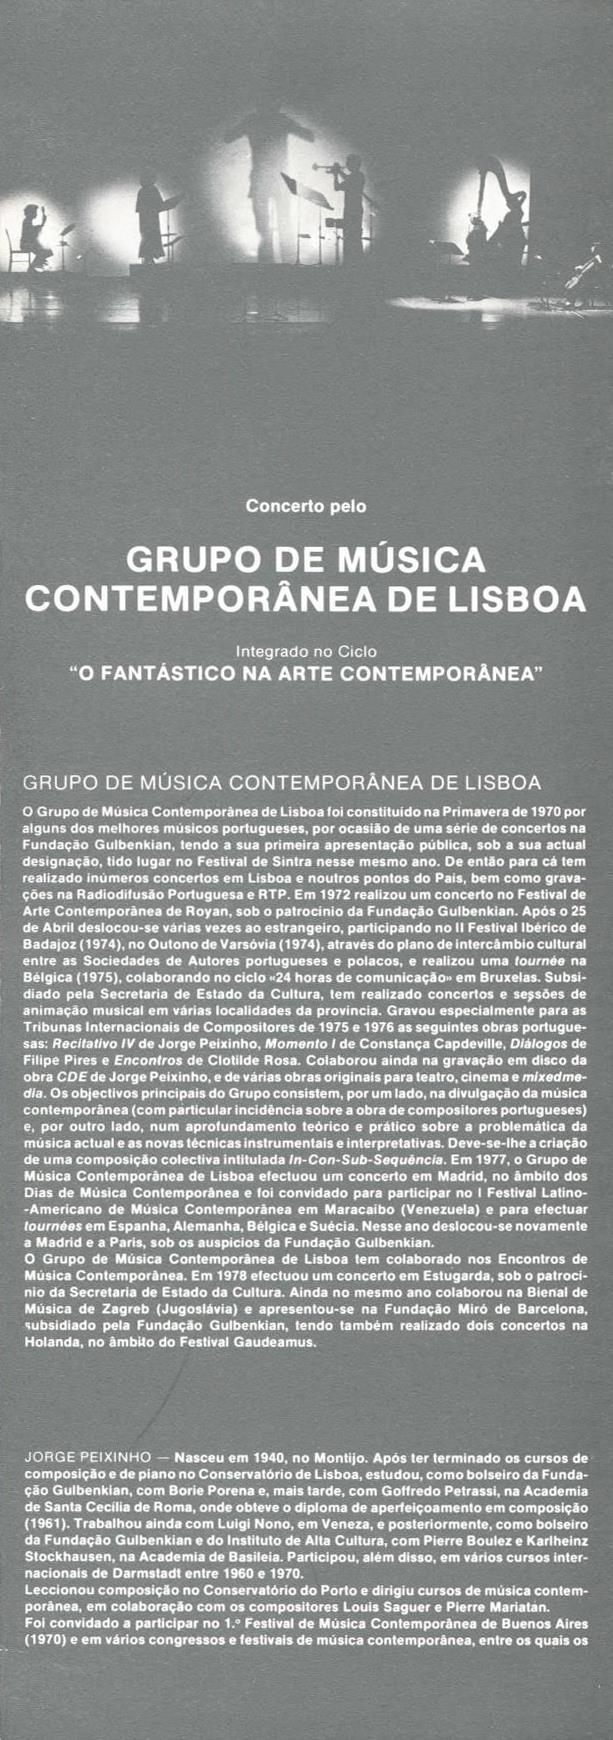 Espectáculo pelo Grupo de Música Contemporânea de Lisboa